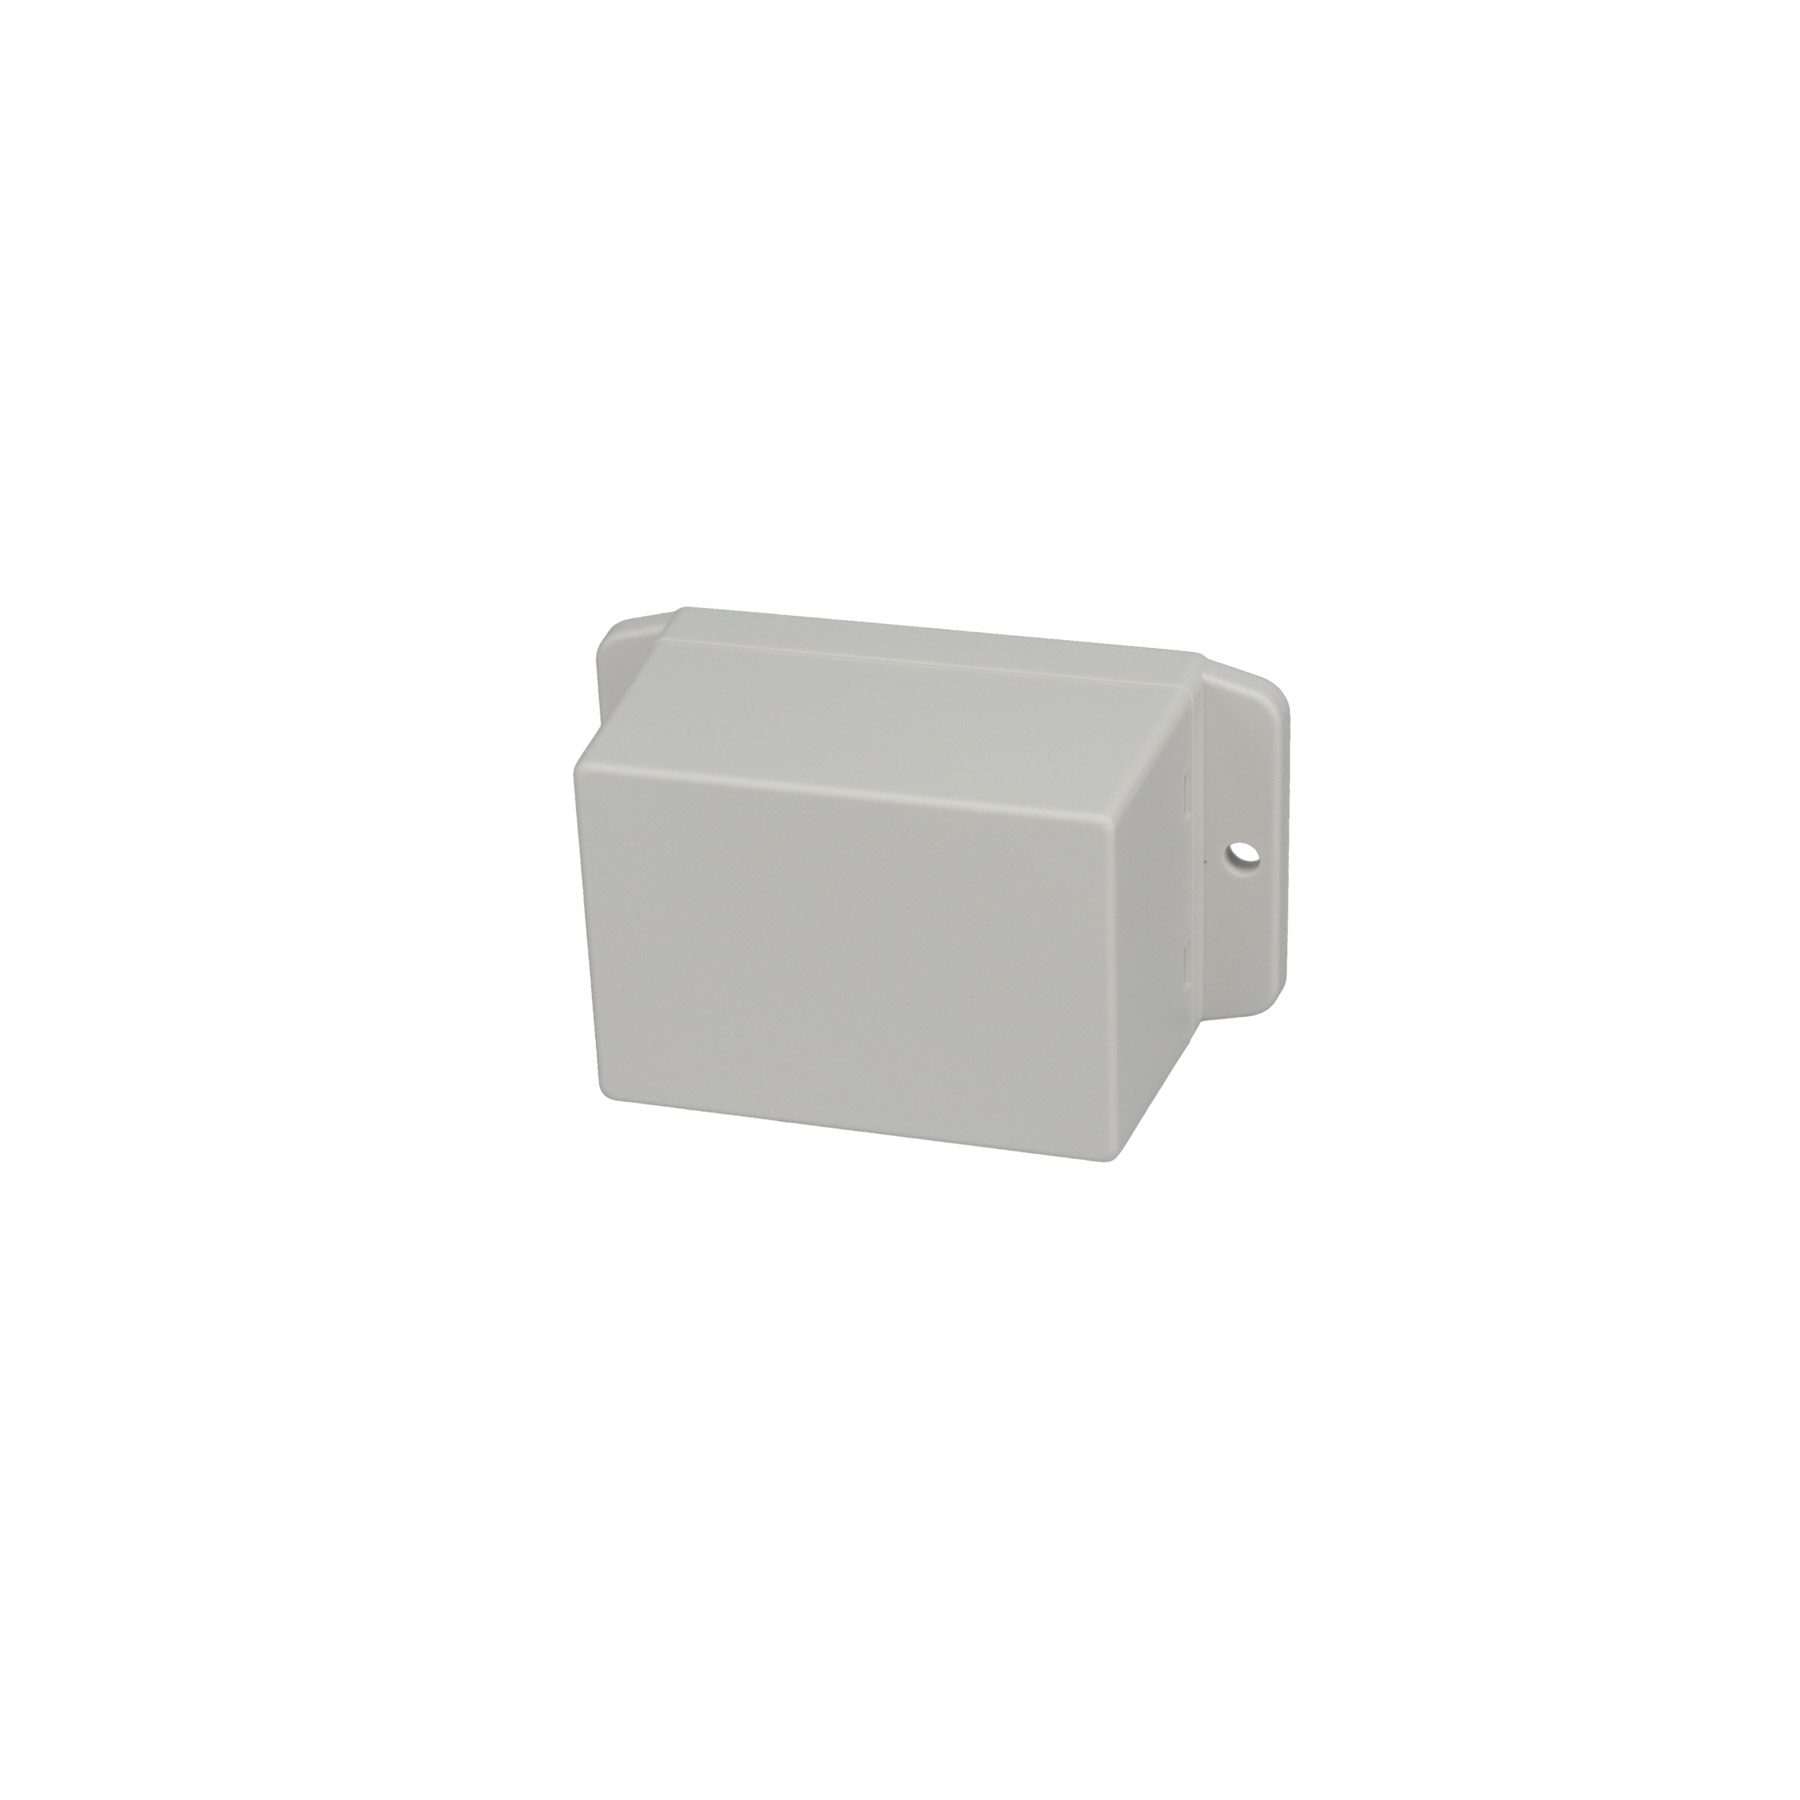 Snap Utility Box White CU-18425-W